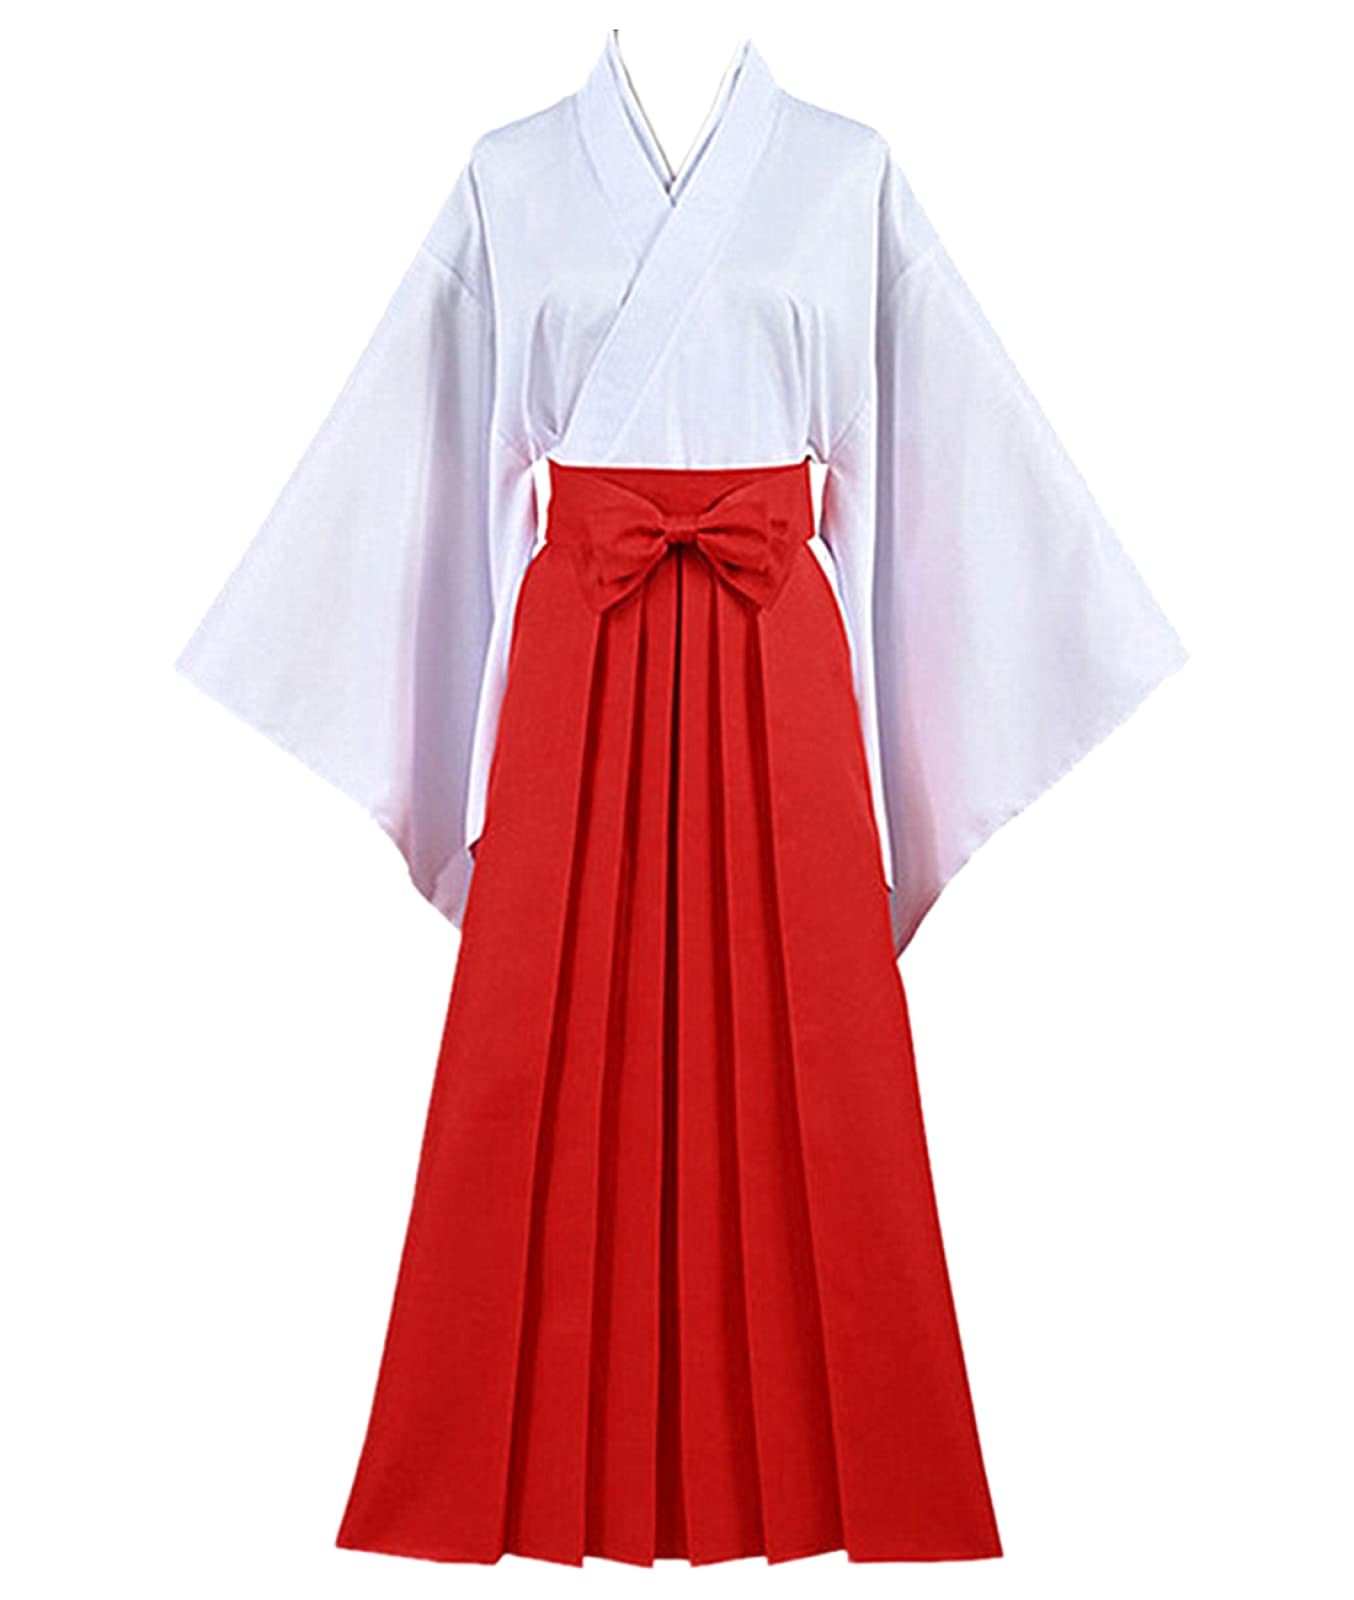 Jujutsu Kaisen Cosplay Iori Utahime Outfits, Damen Kimono Kleid Kostüm Anzug für Anime Fans Cosplay, Rot, XL